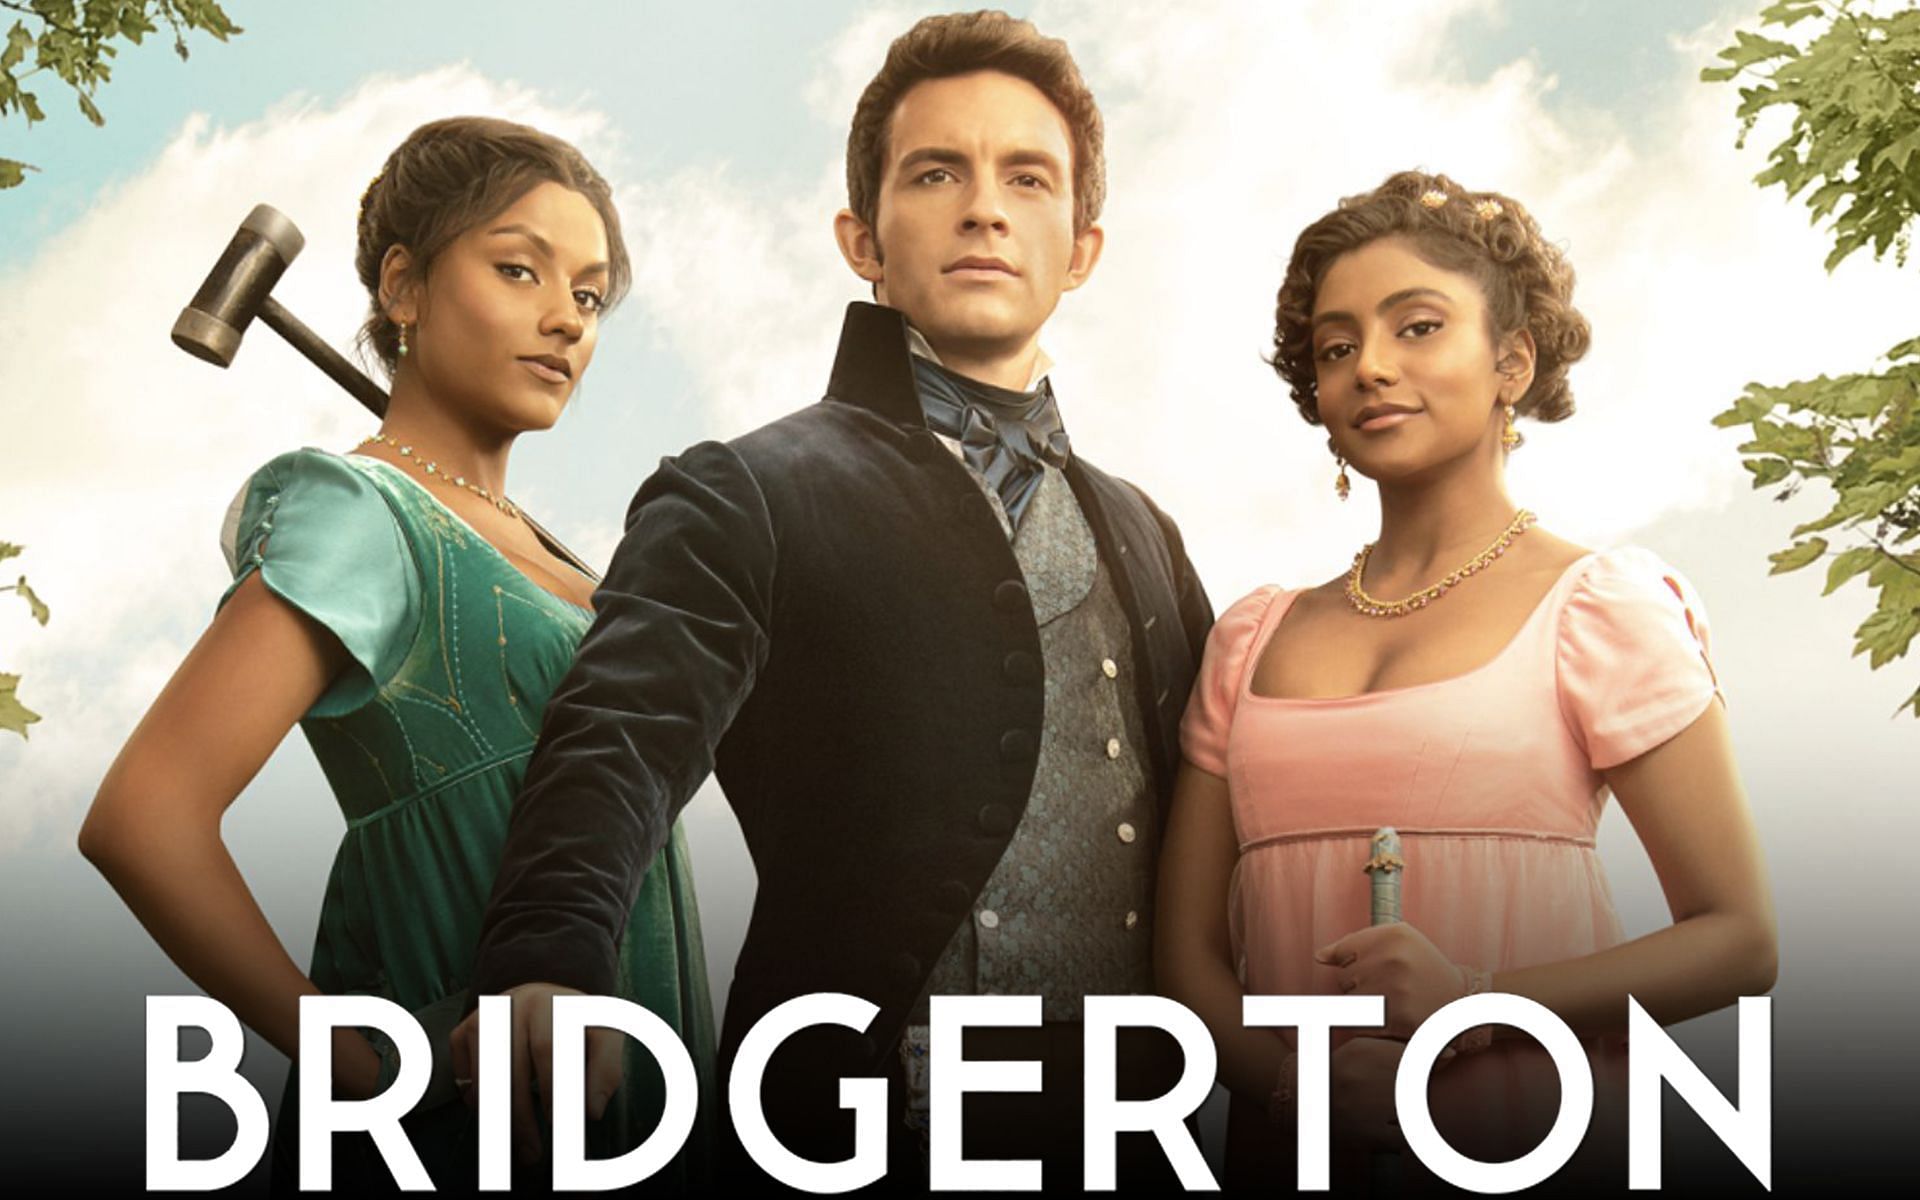 Bridgerton returns with its second season on Netflix on March 25, 2022. (Image via IMDb)